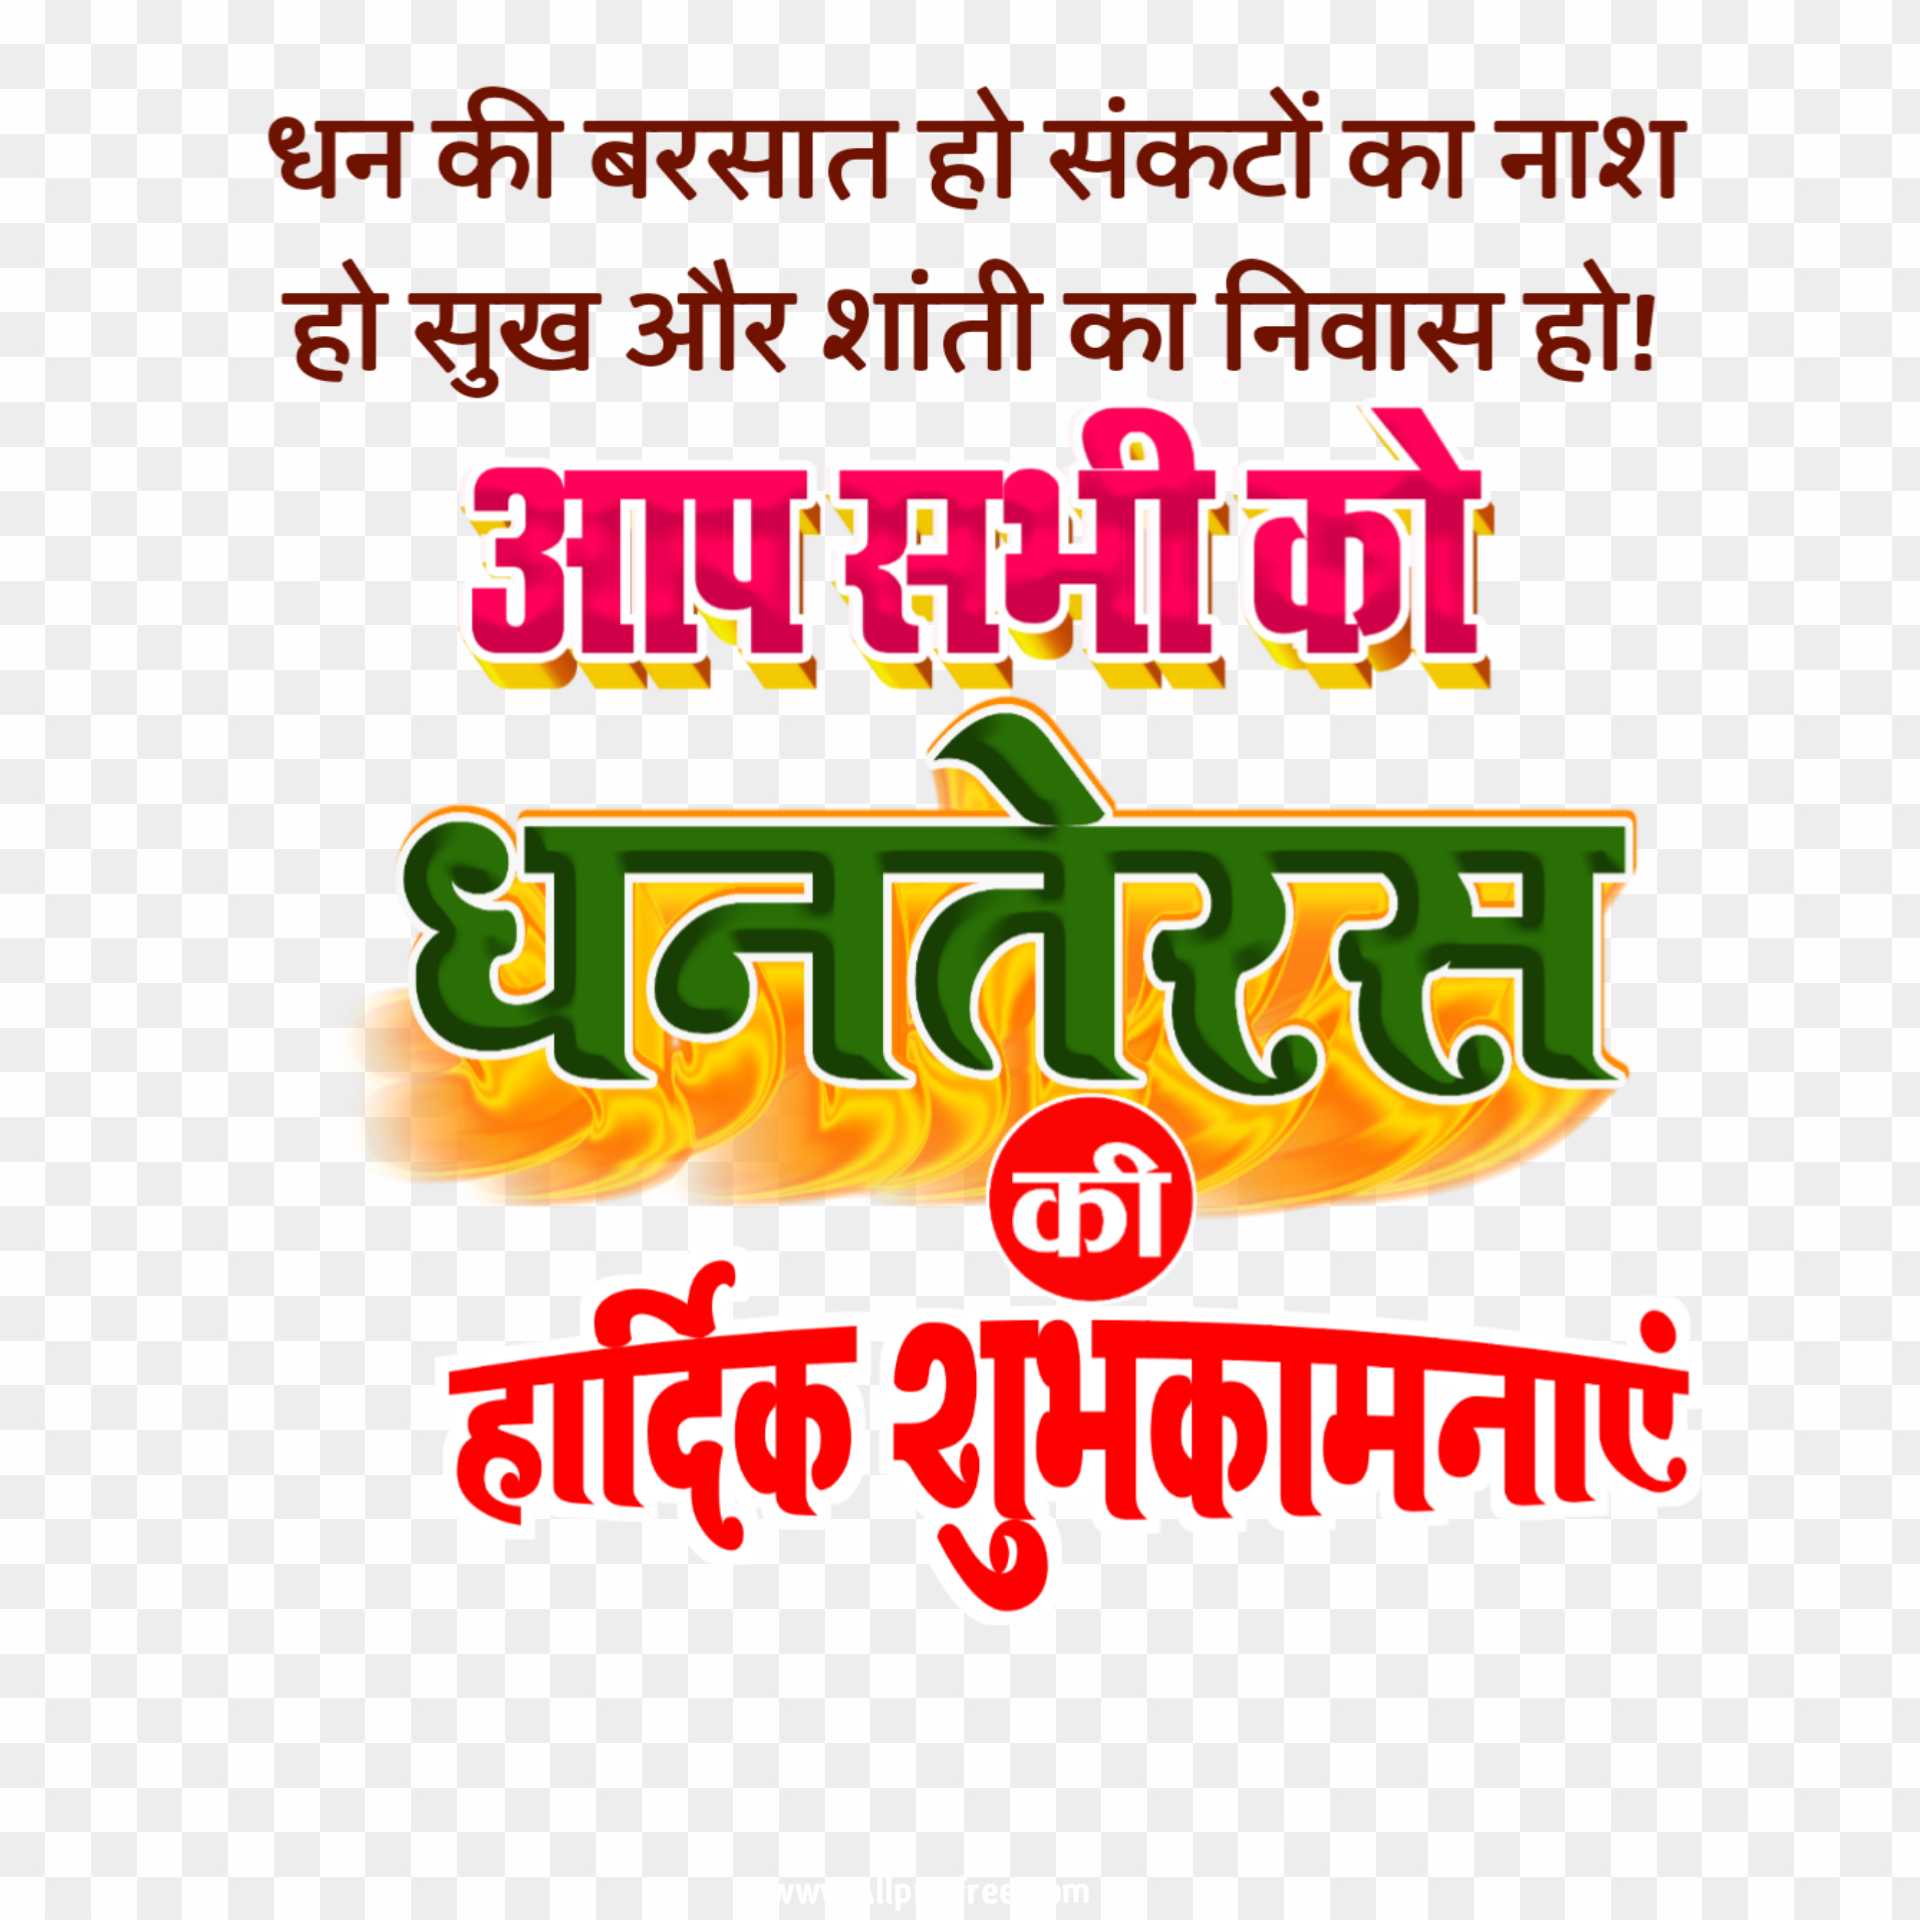 Happy Dhanteras hindi text PNG images download 